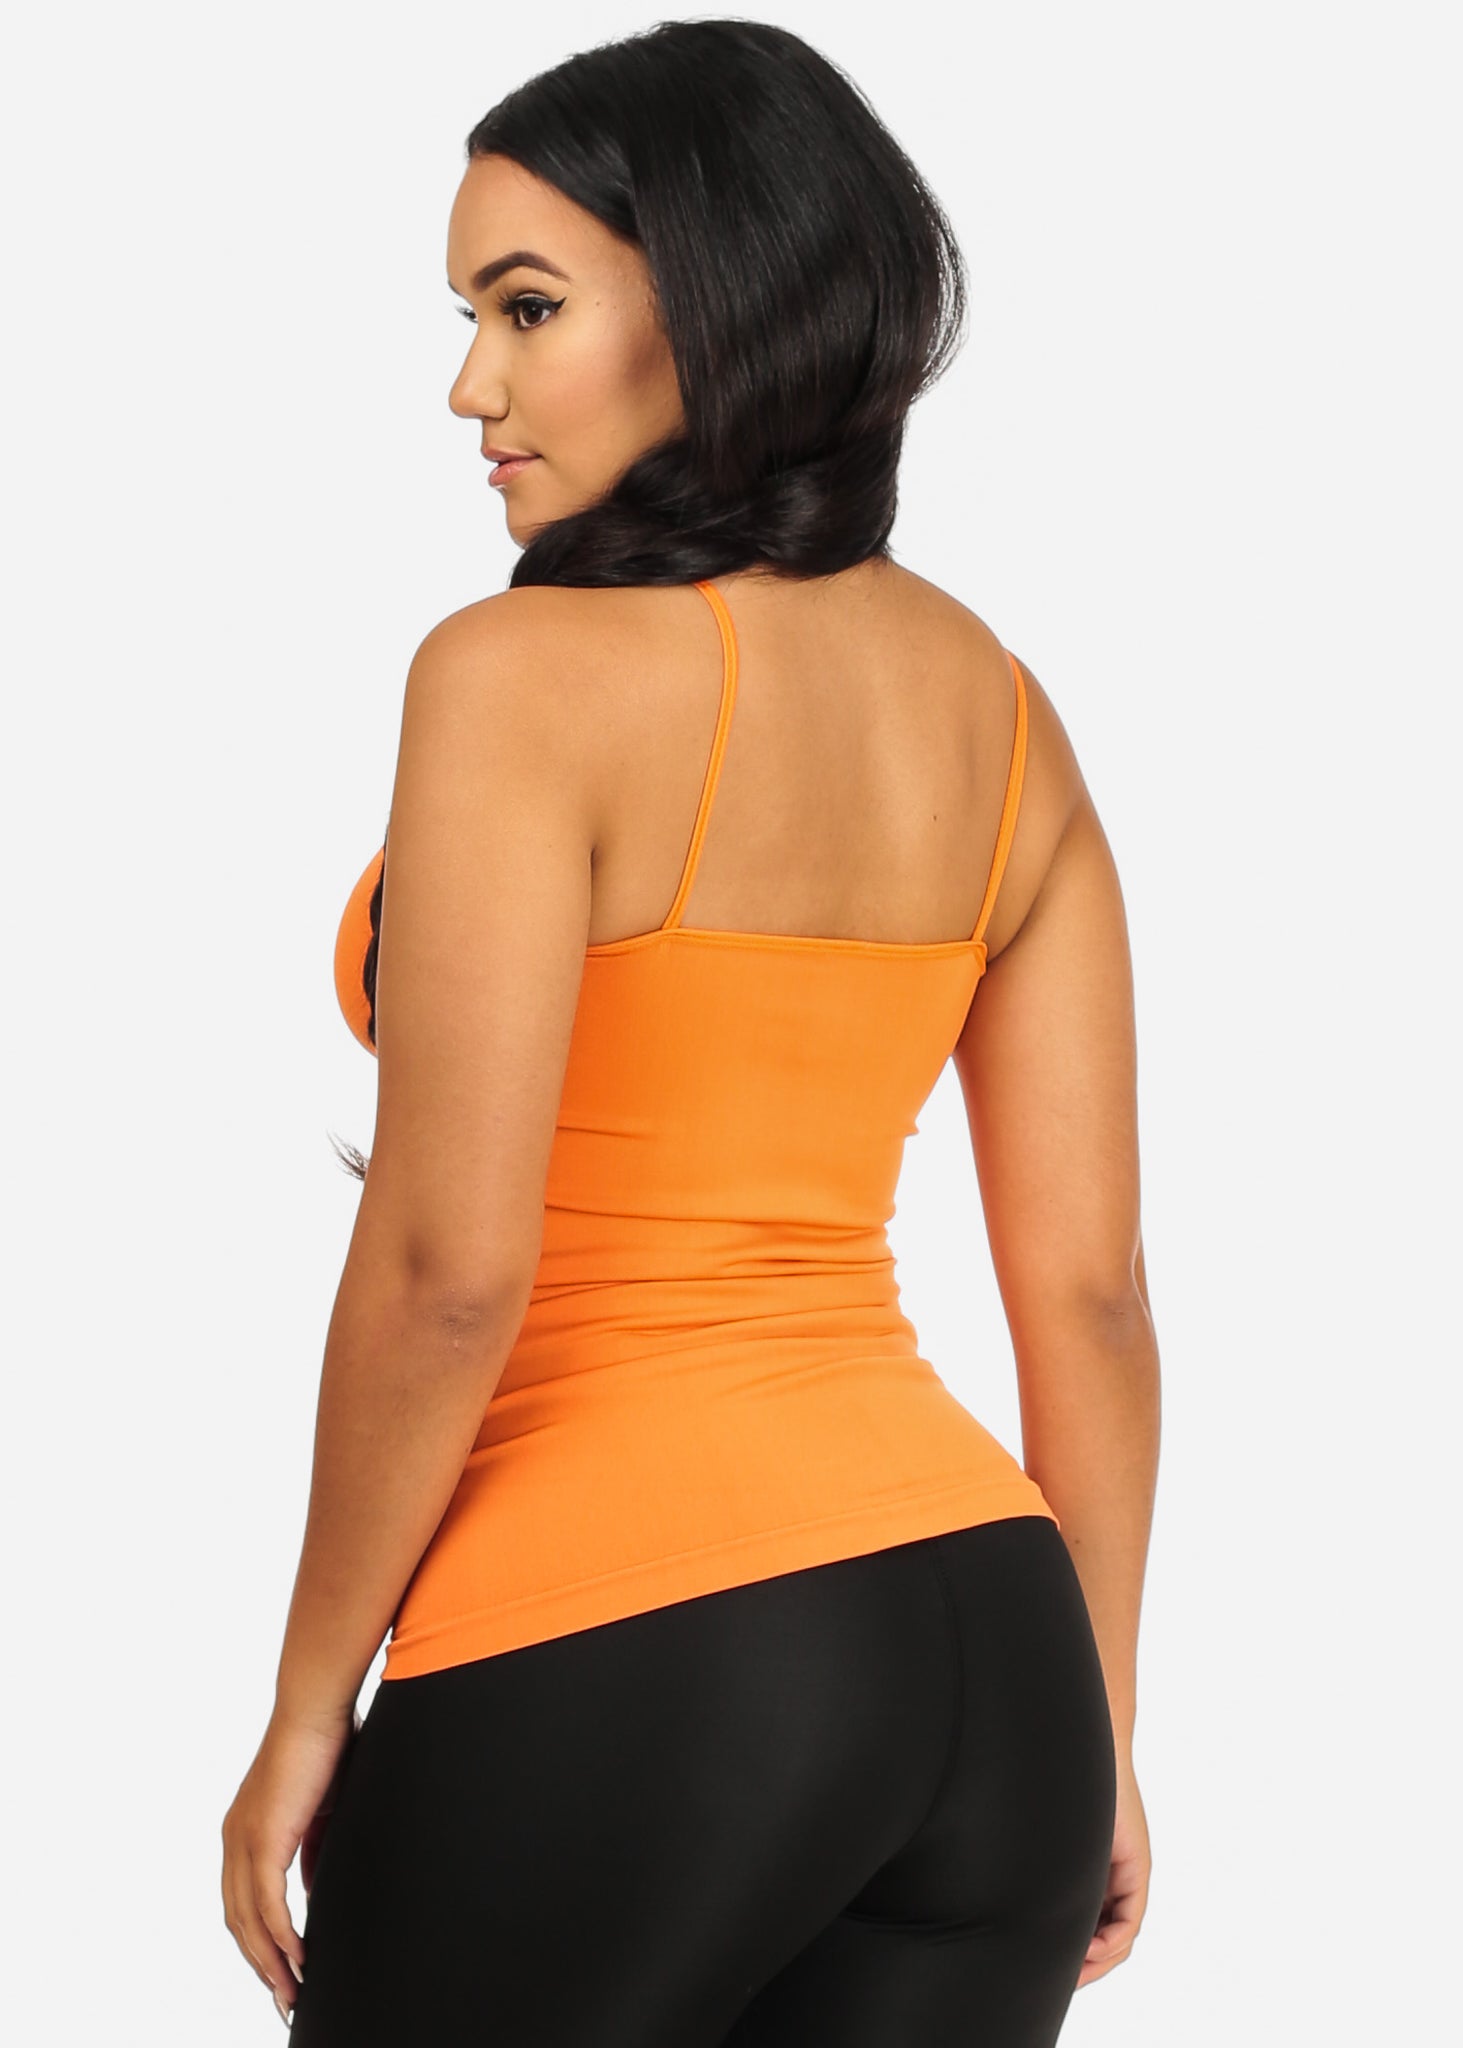 Women's Spaghetti Strap Sunrise Orange Color Sleeveless Top T-03R – One  Size Fits